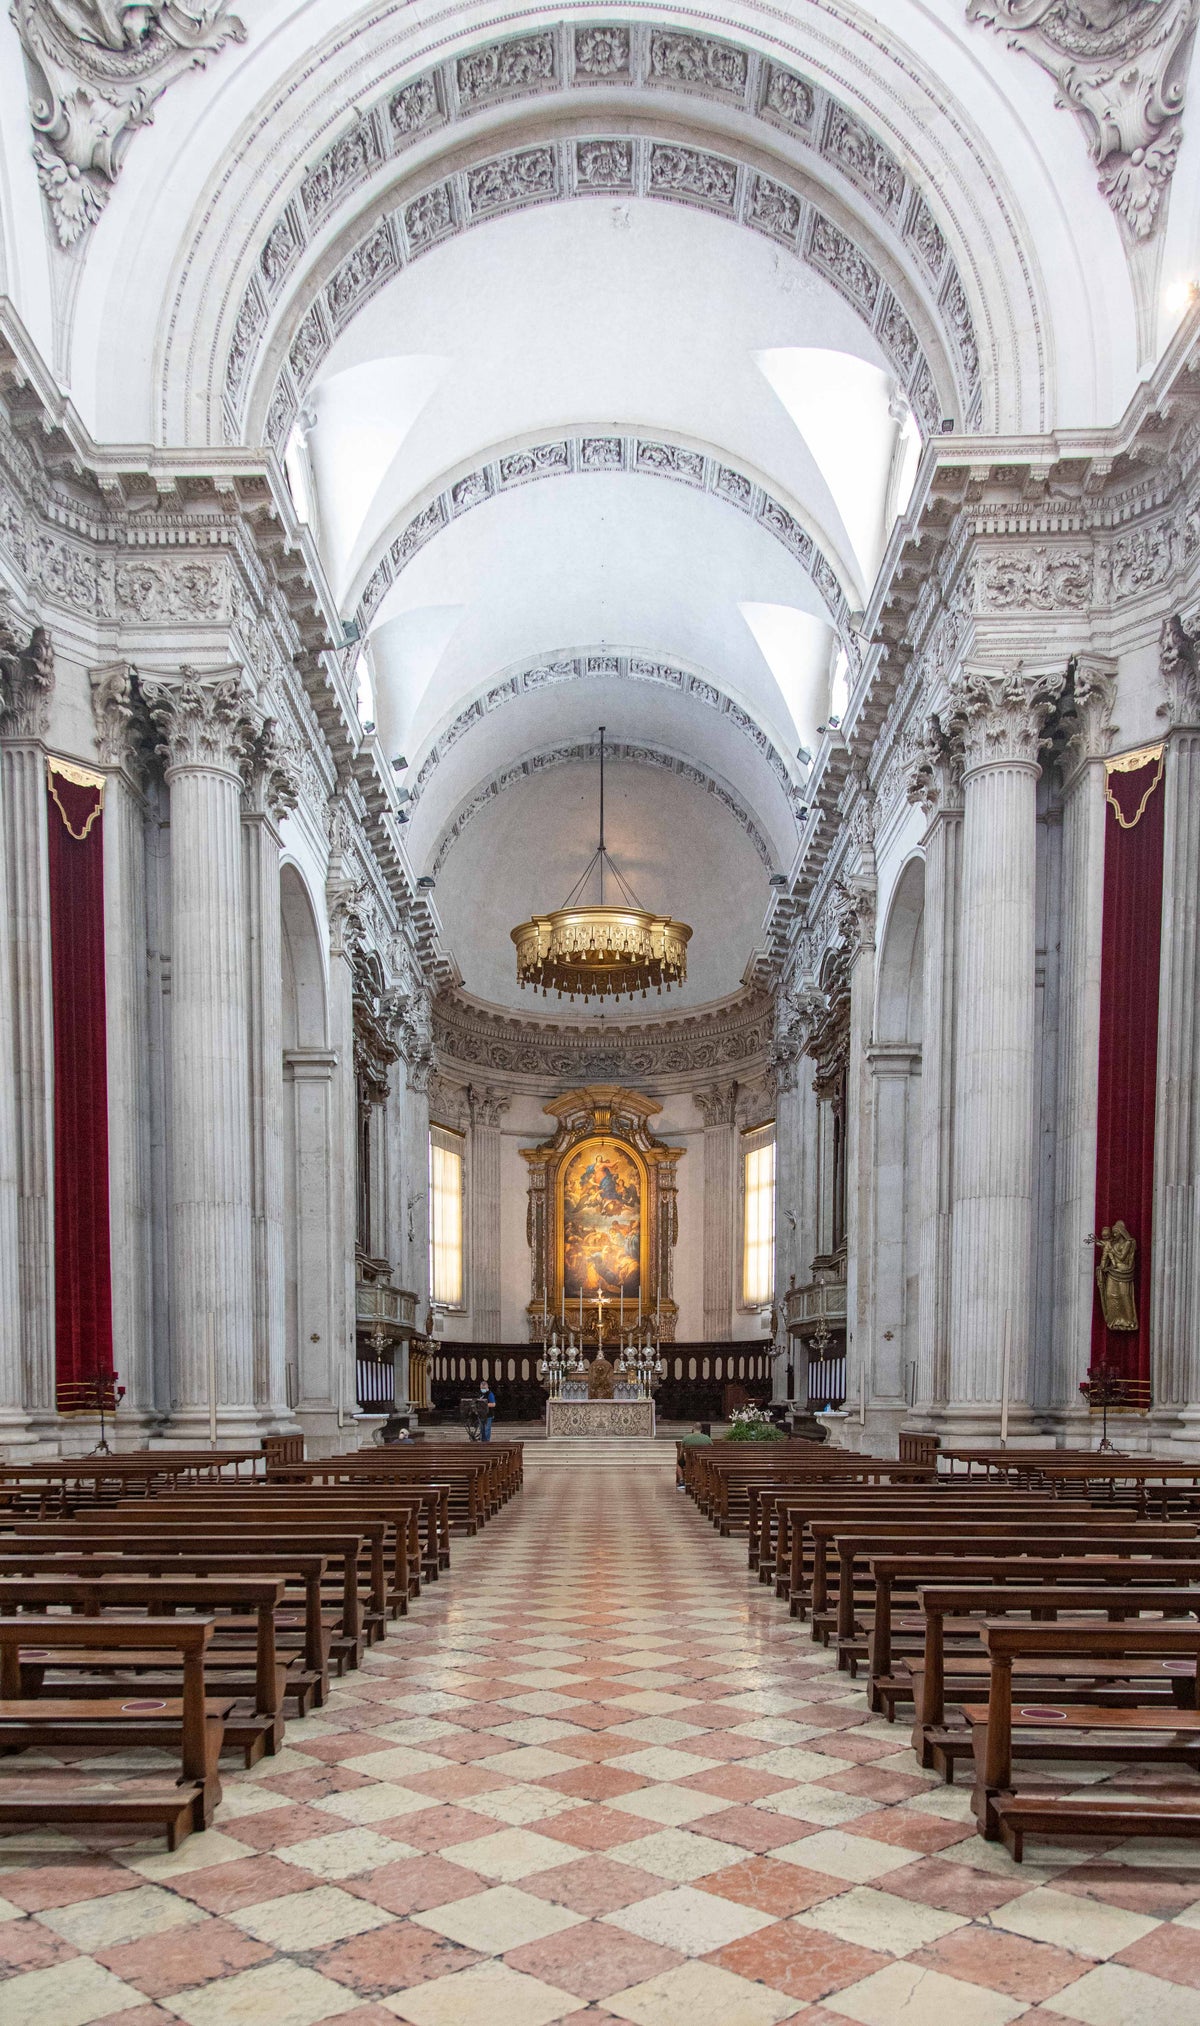 the interior of a white church